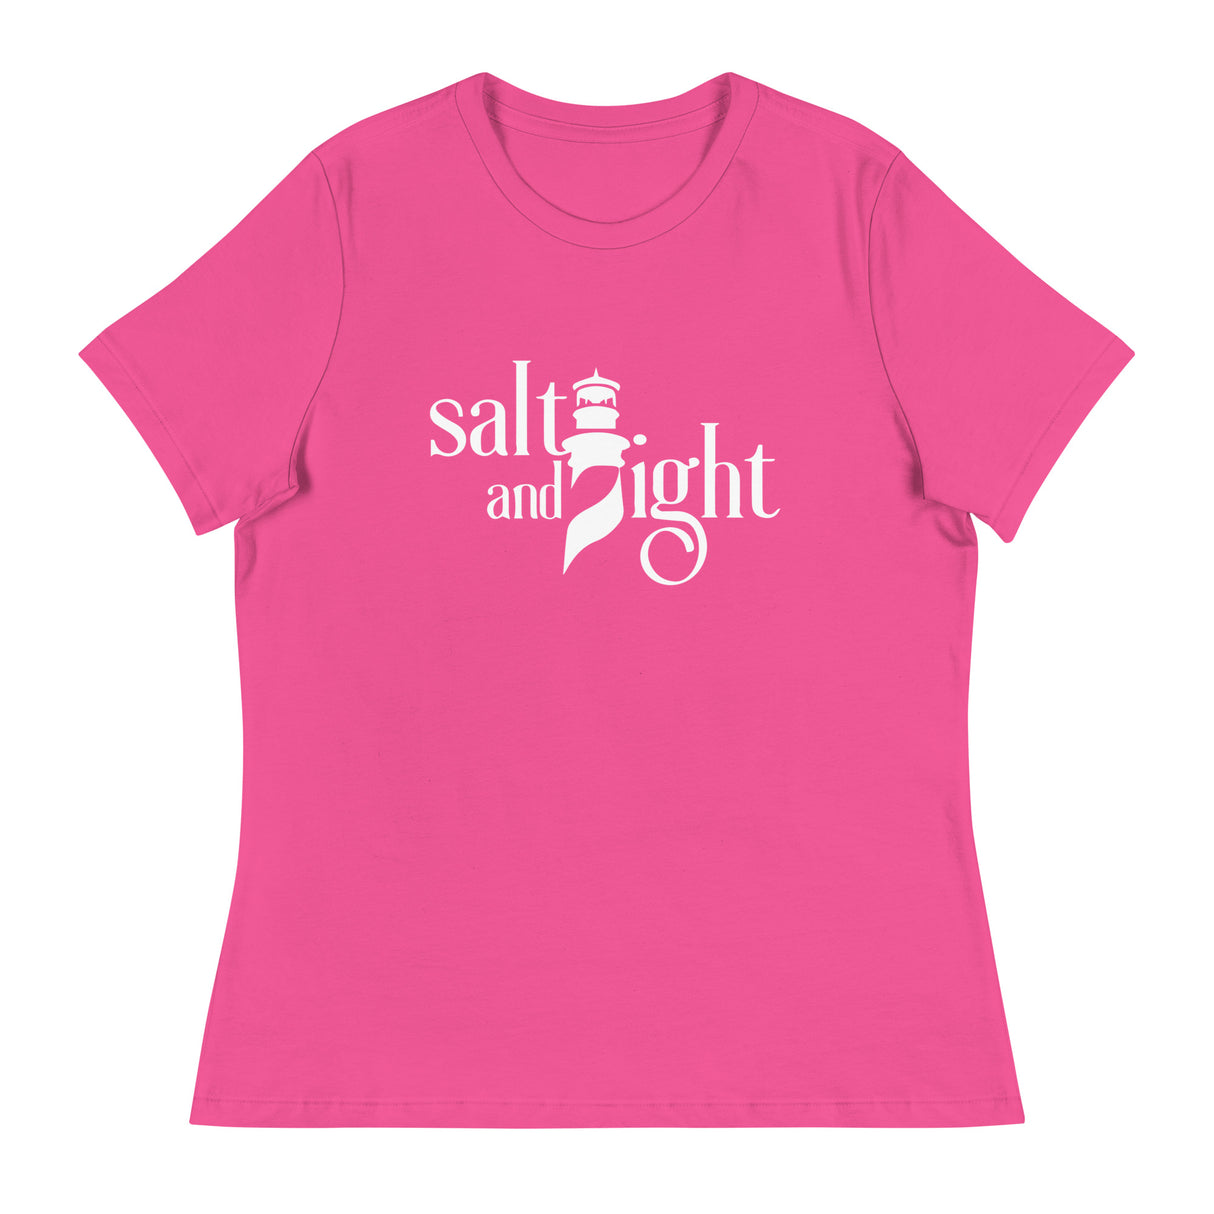 Camiseta: Camiseta holgada para mujer Salt and Light (varios colores)